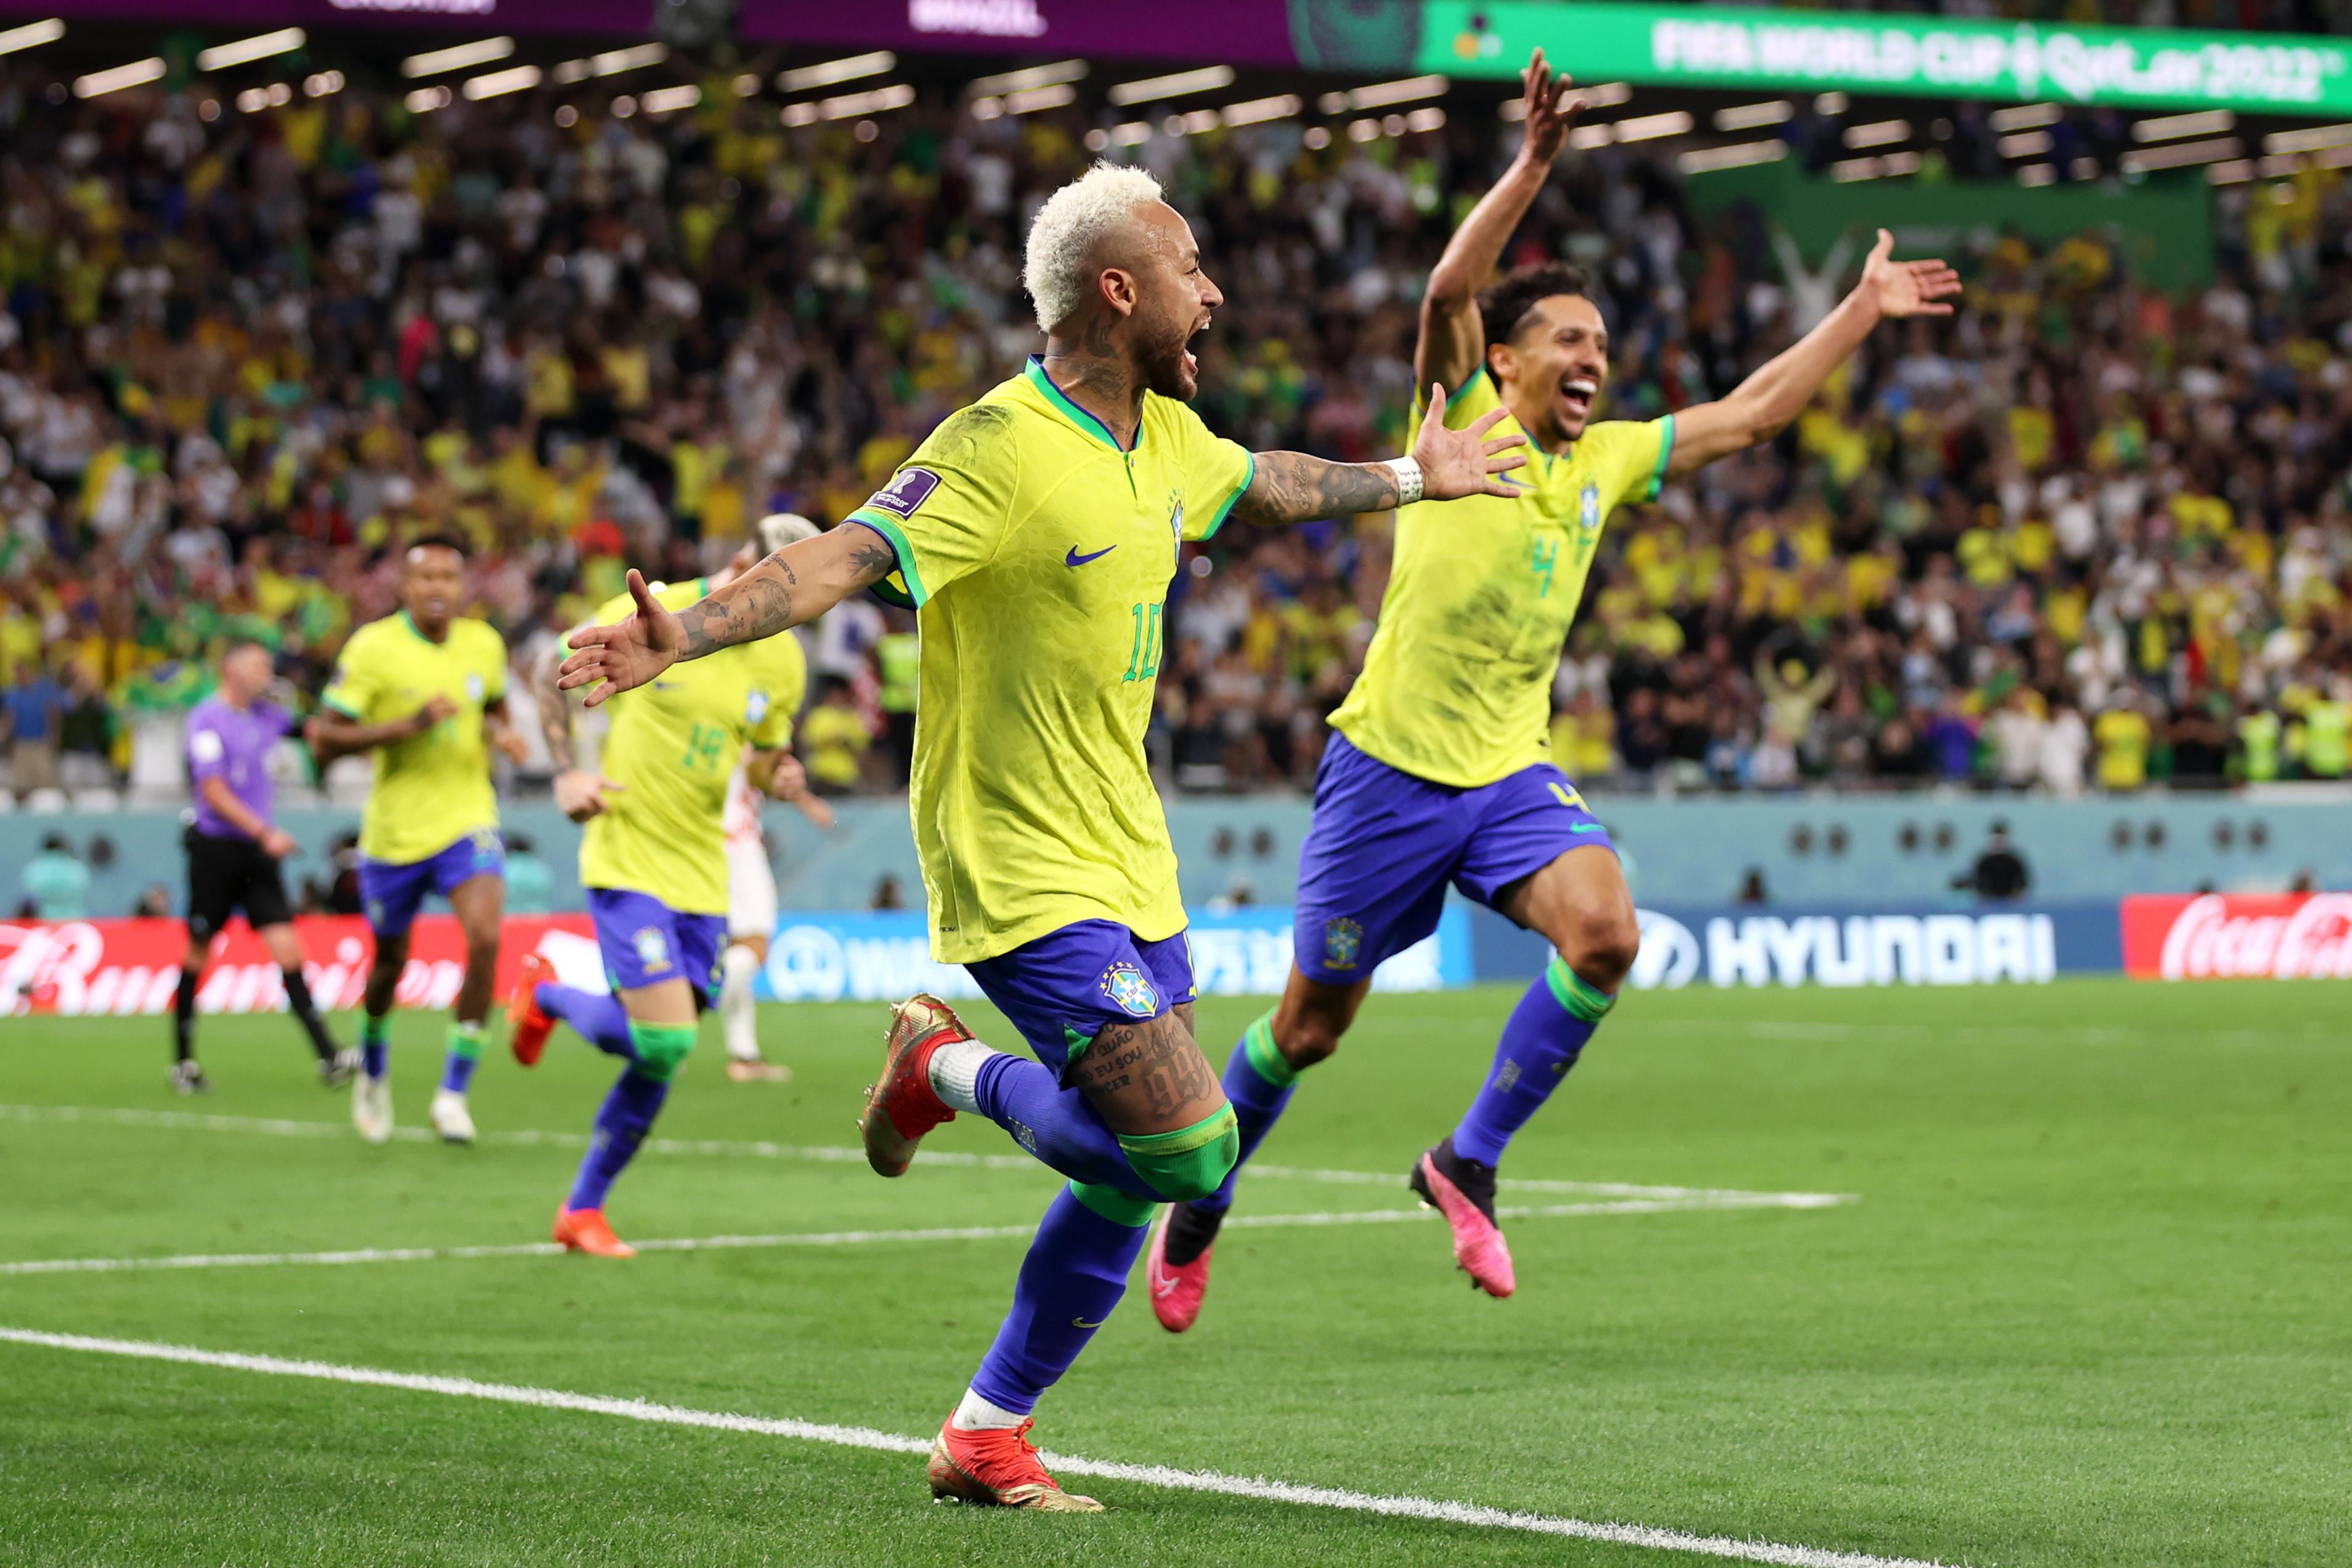 77 goals: Neymar Jr. joins Pelé as the greatest Brazil National